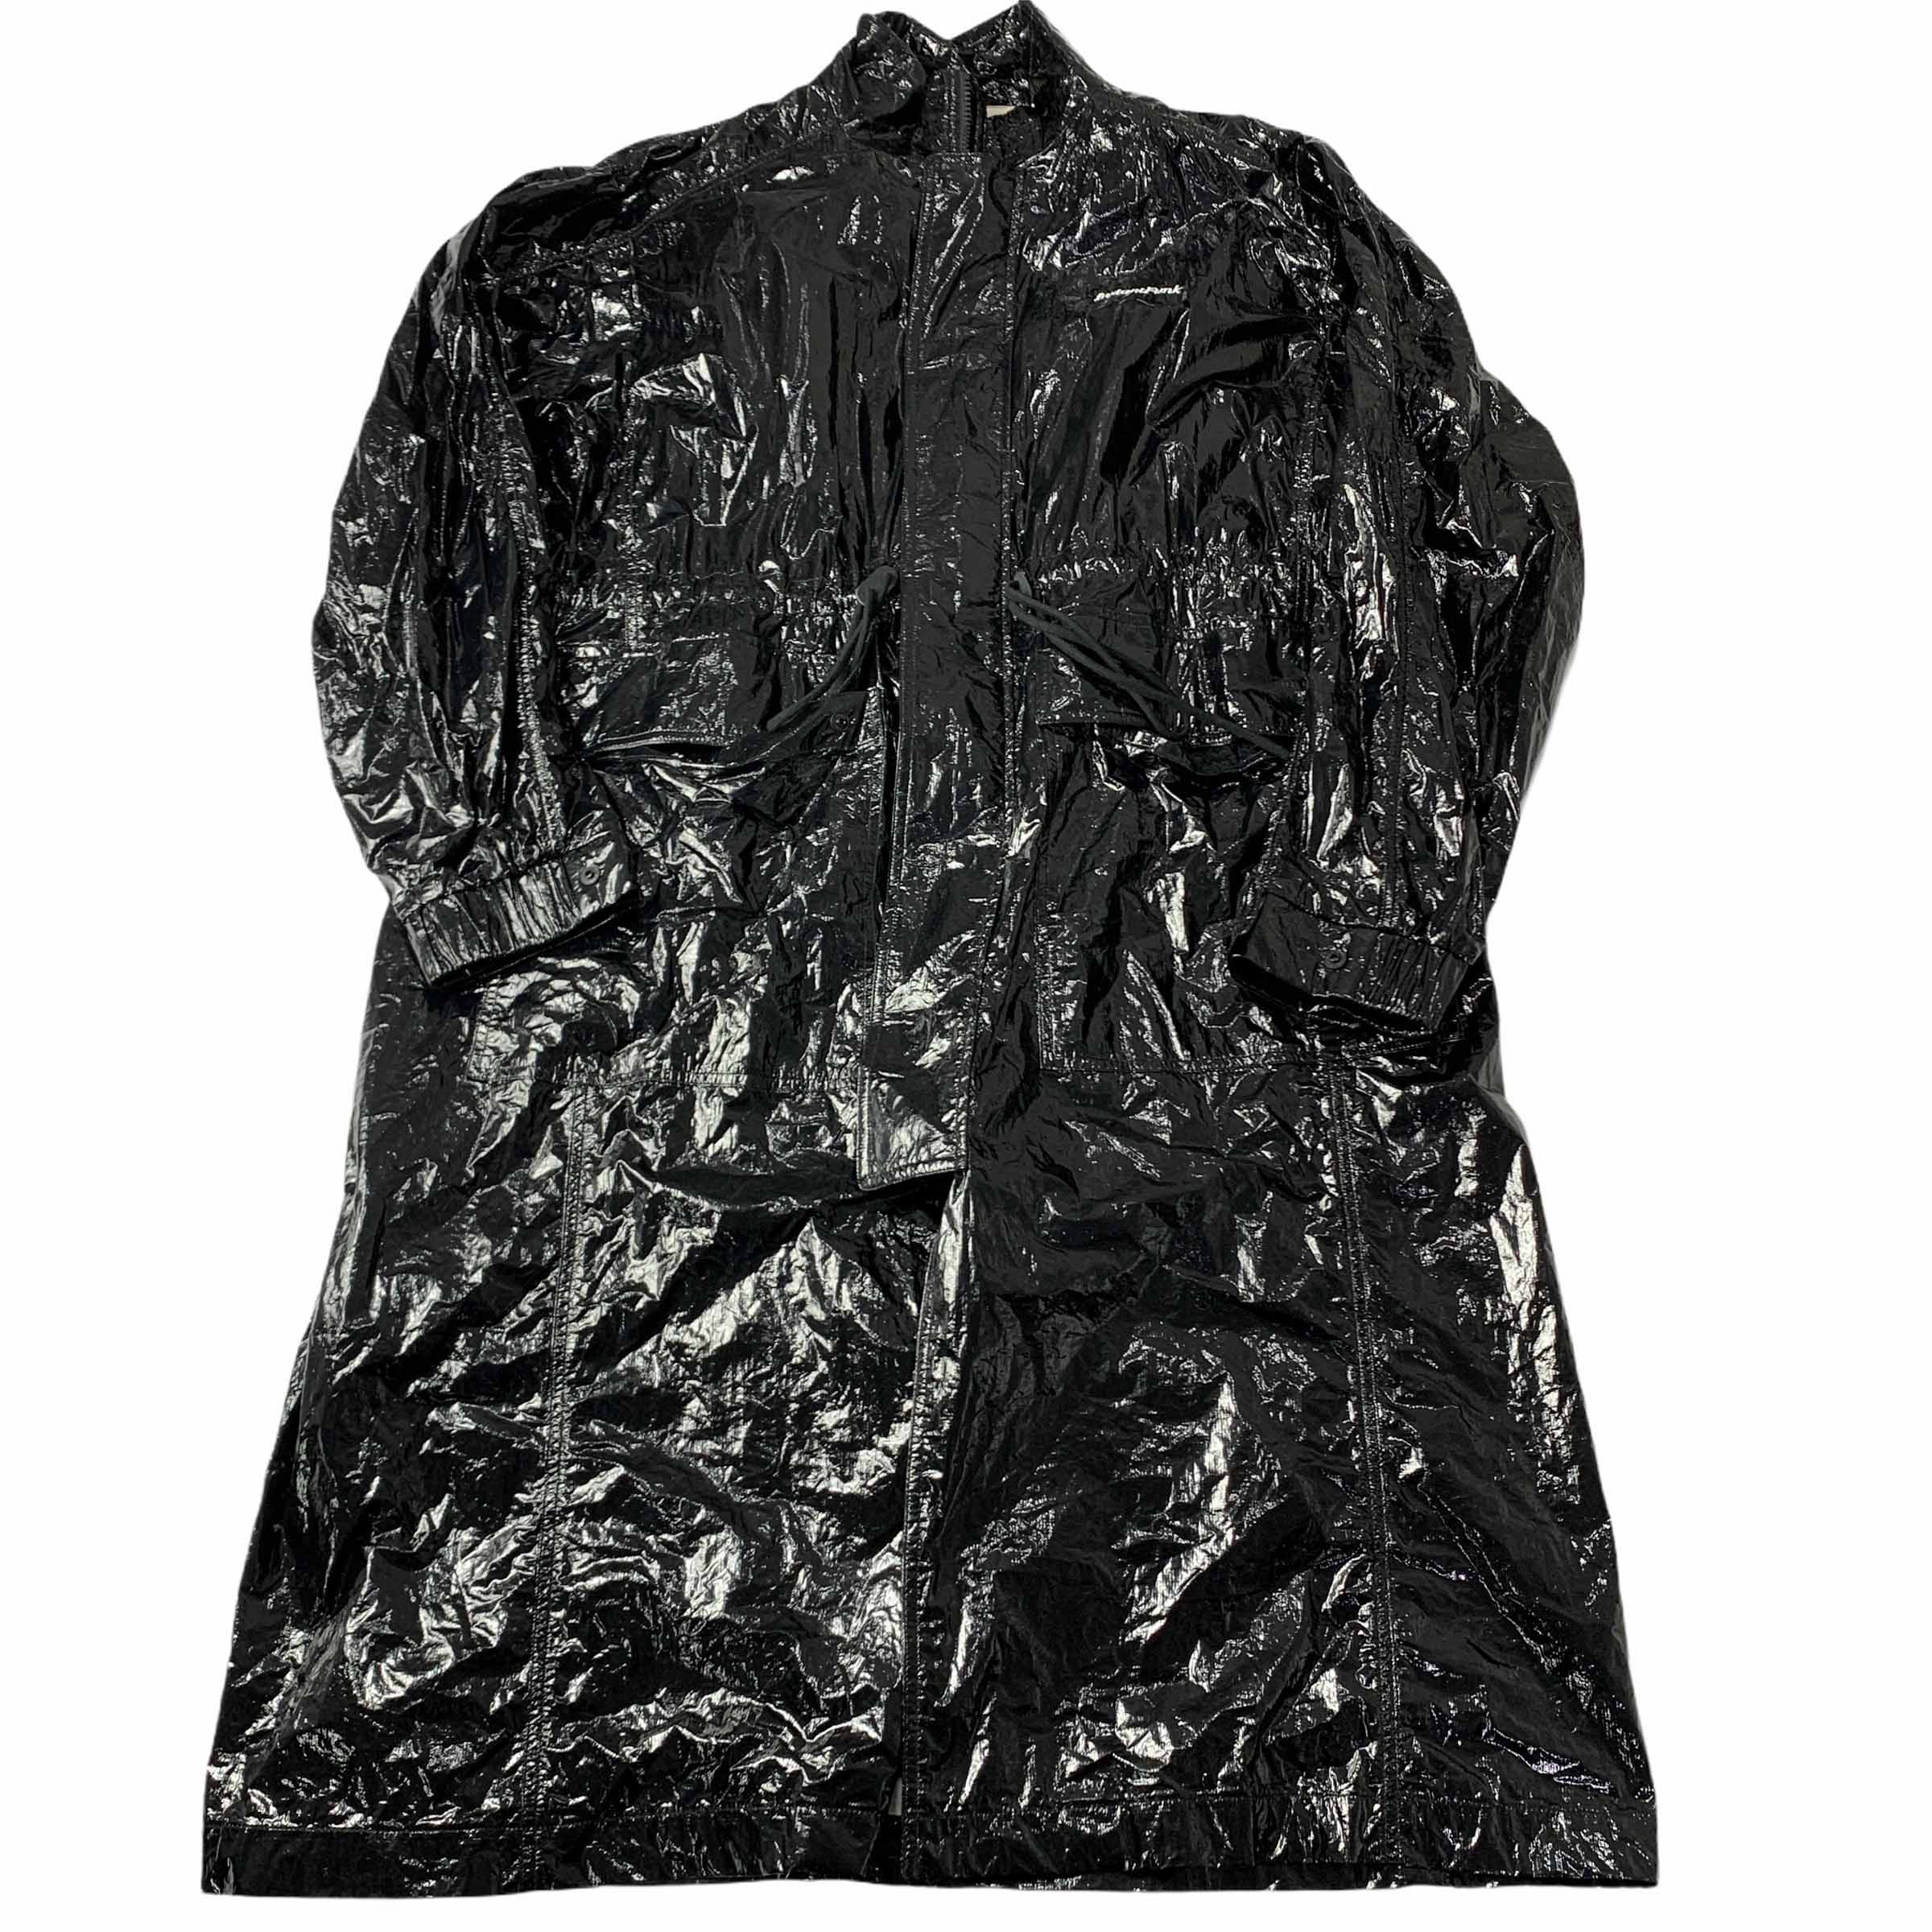 [Instant funk] Gloss Black Raincoat - Size 2